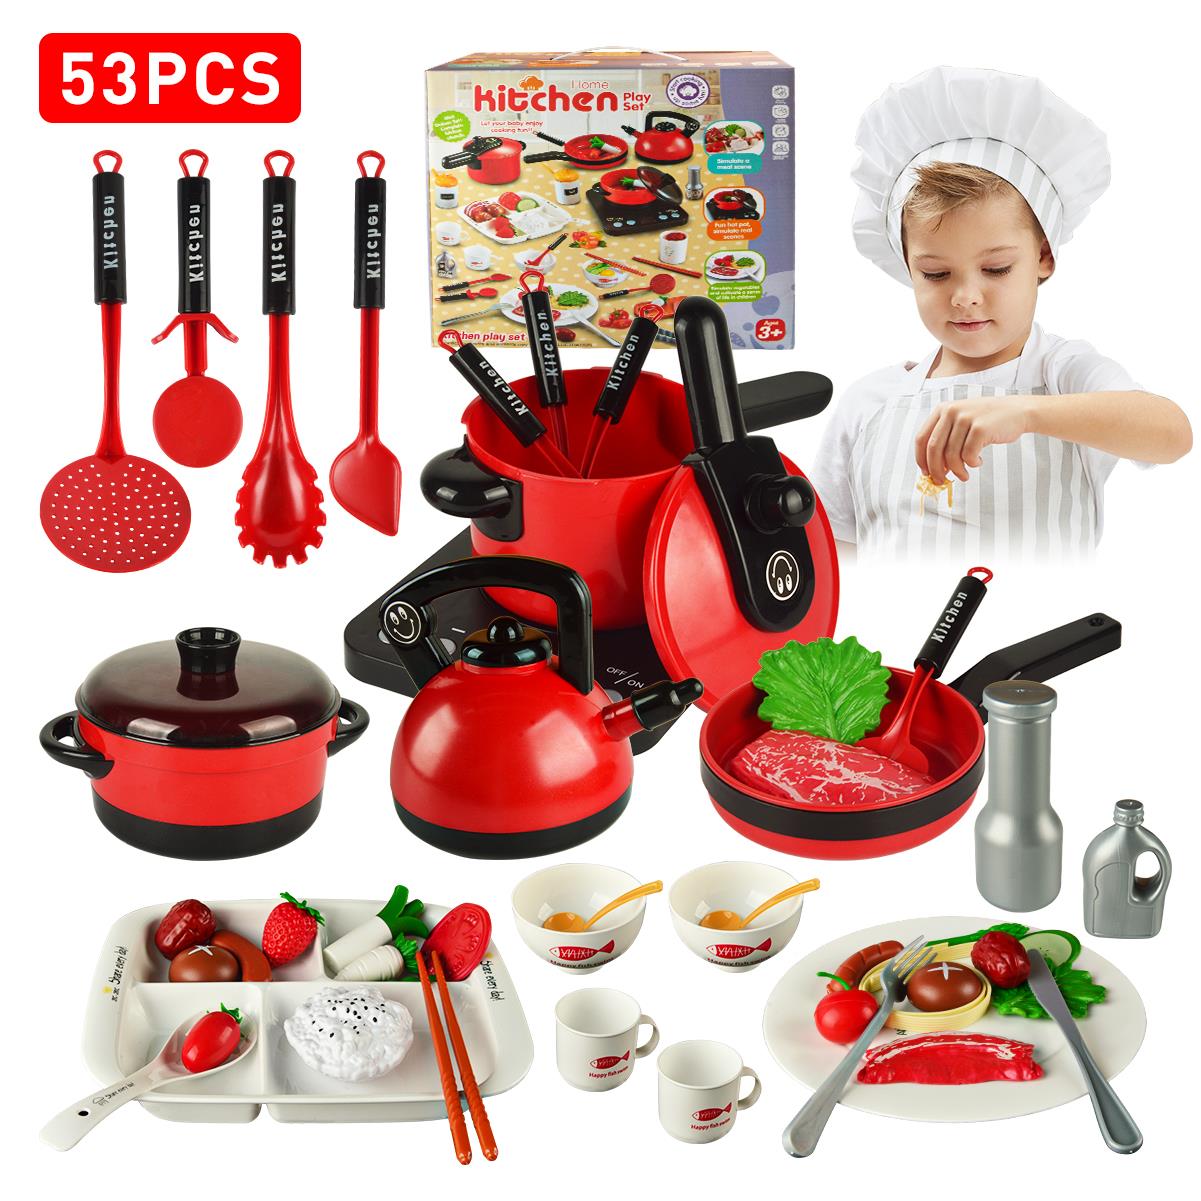 53Pcs Kitchen Toys Kids Kitchen Playsets Play Kitchen Set for Kids,Food Play Cooking Toys Set